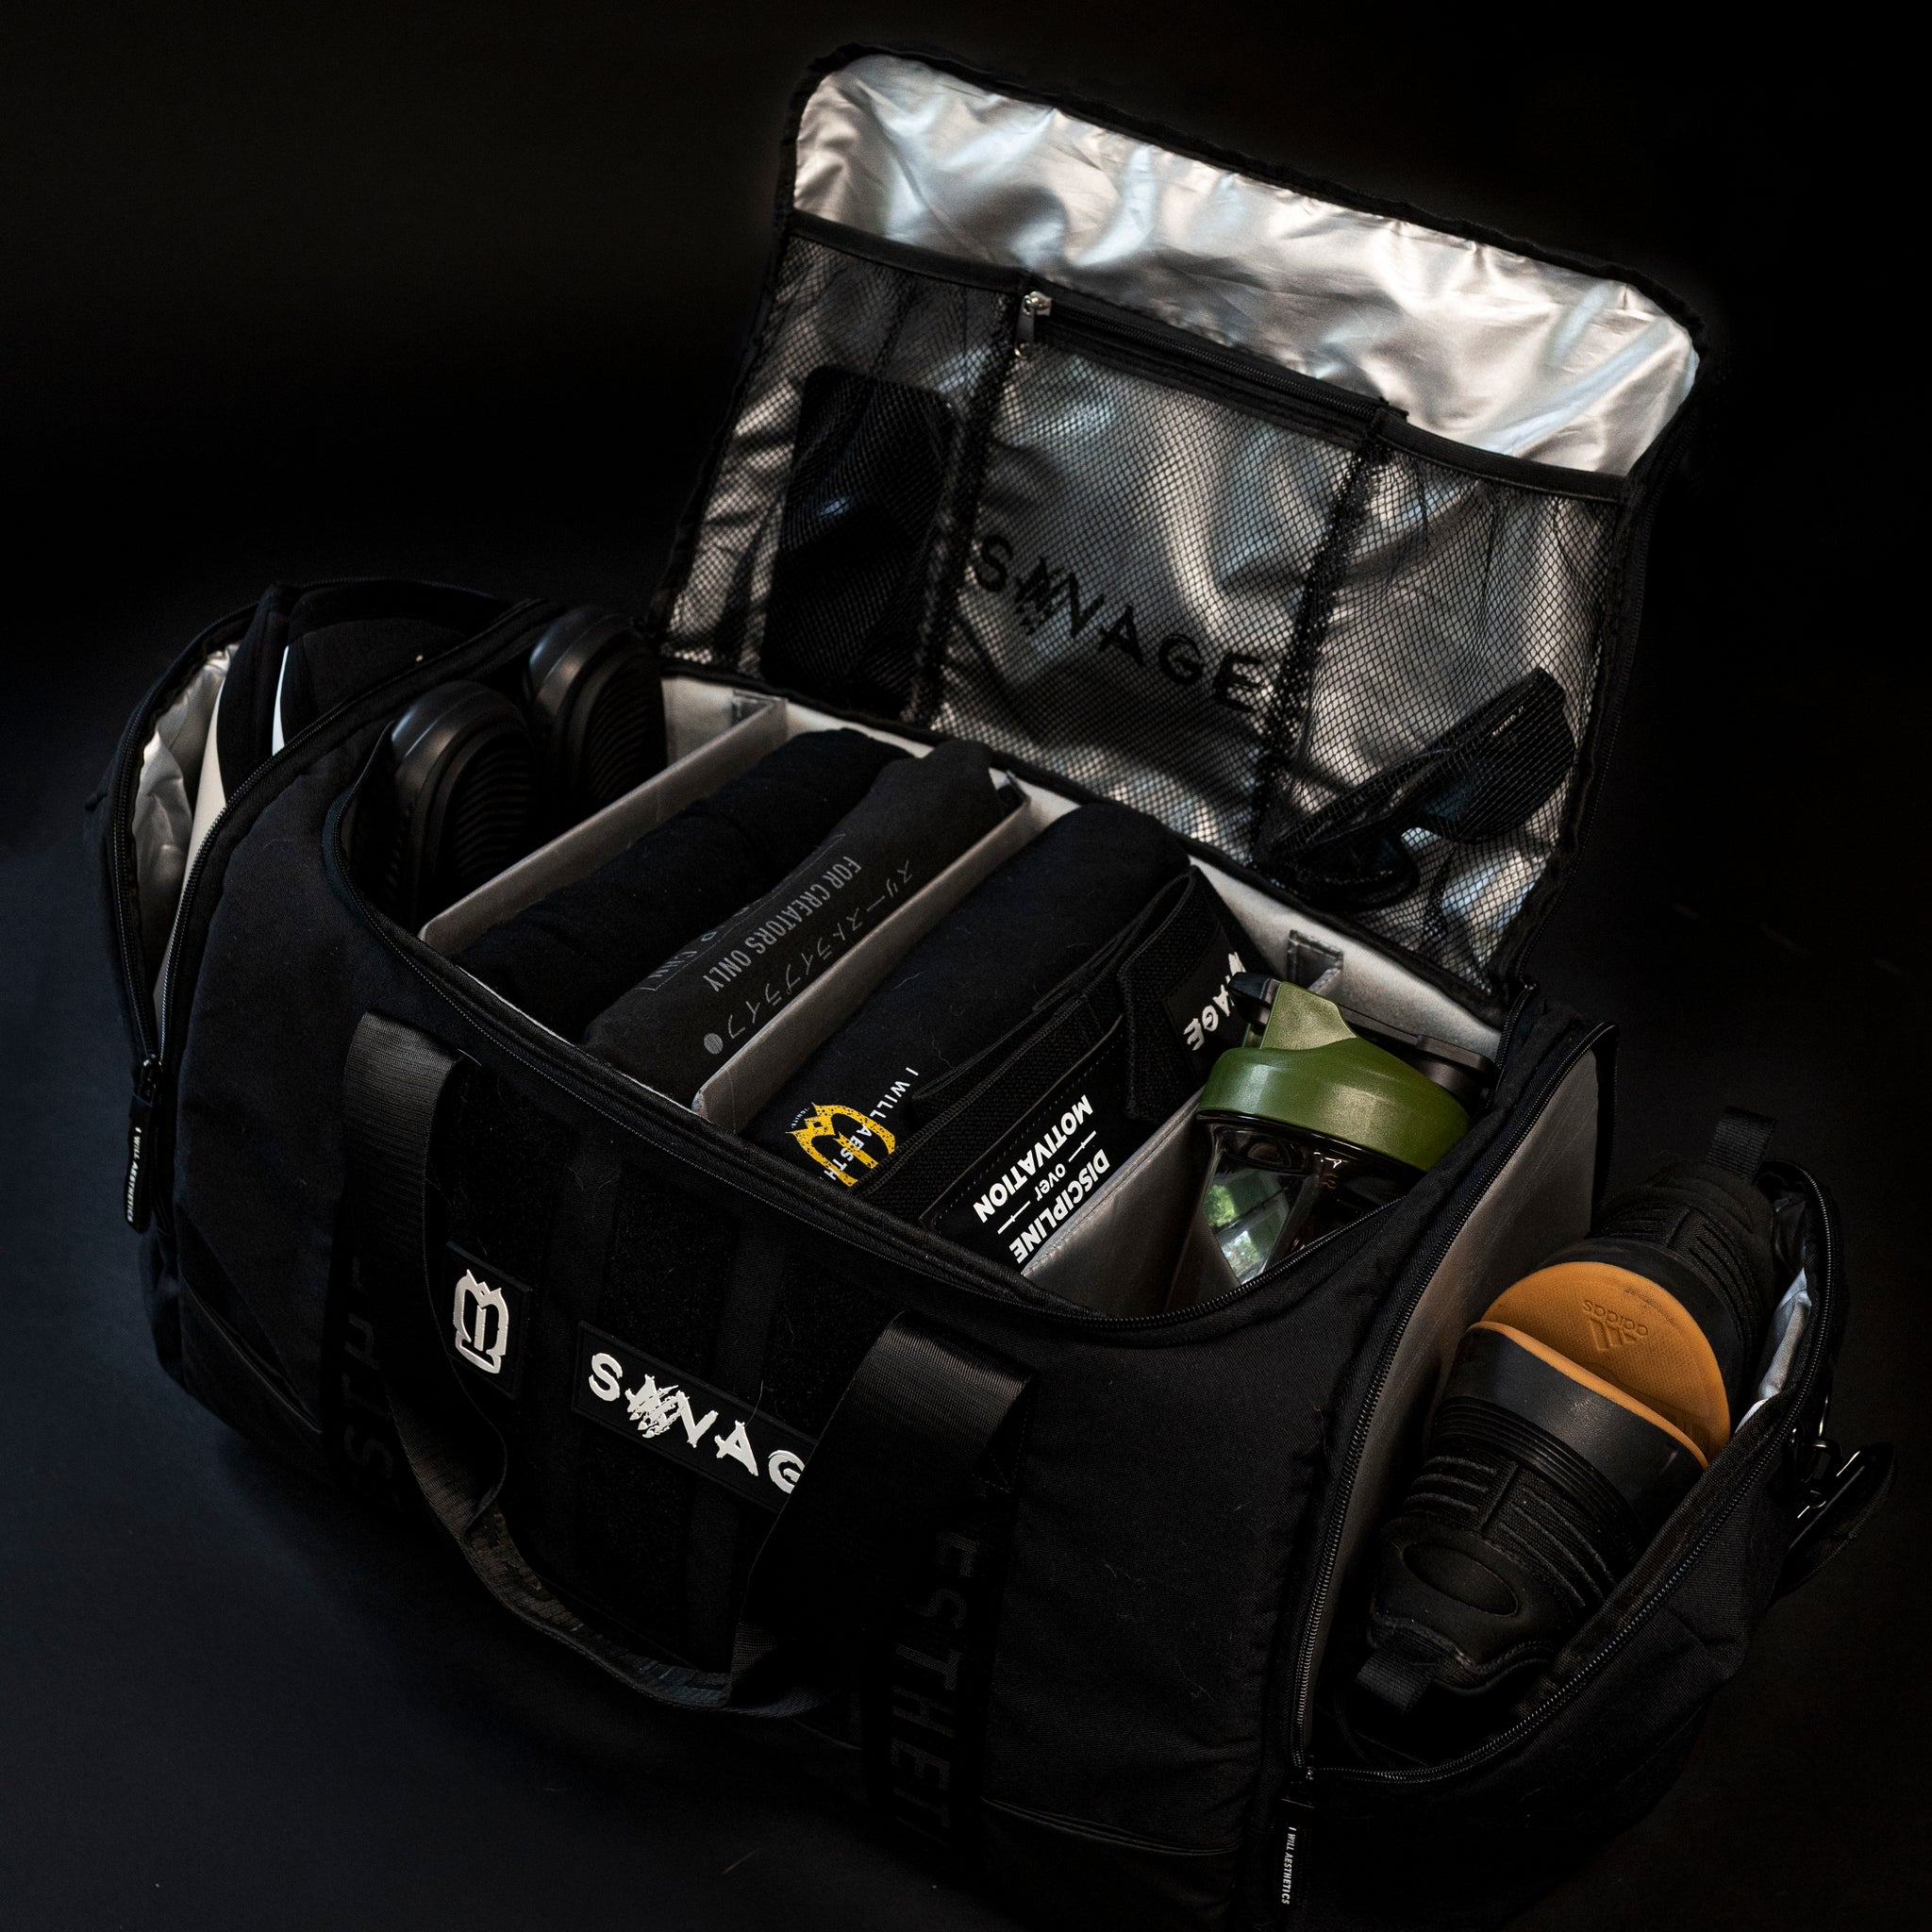 Hyland's Powered on X: An under-the-radar gym bag necessity! PRID